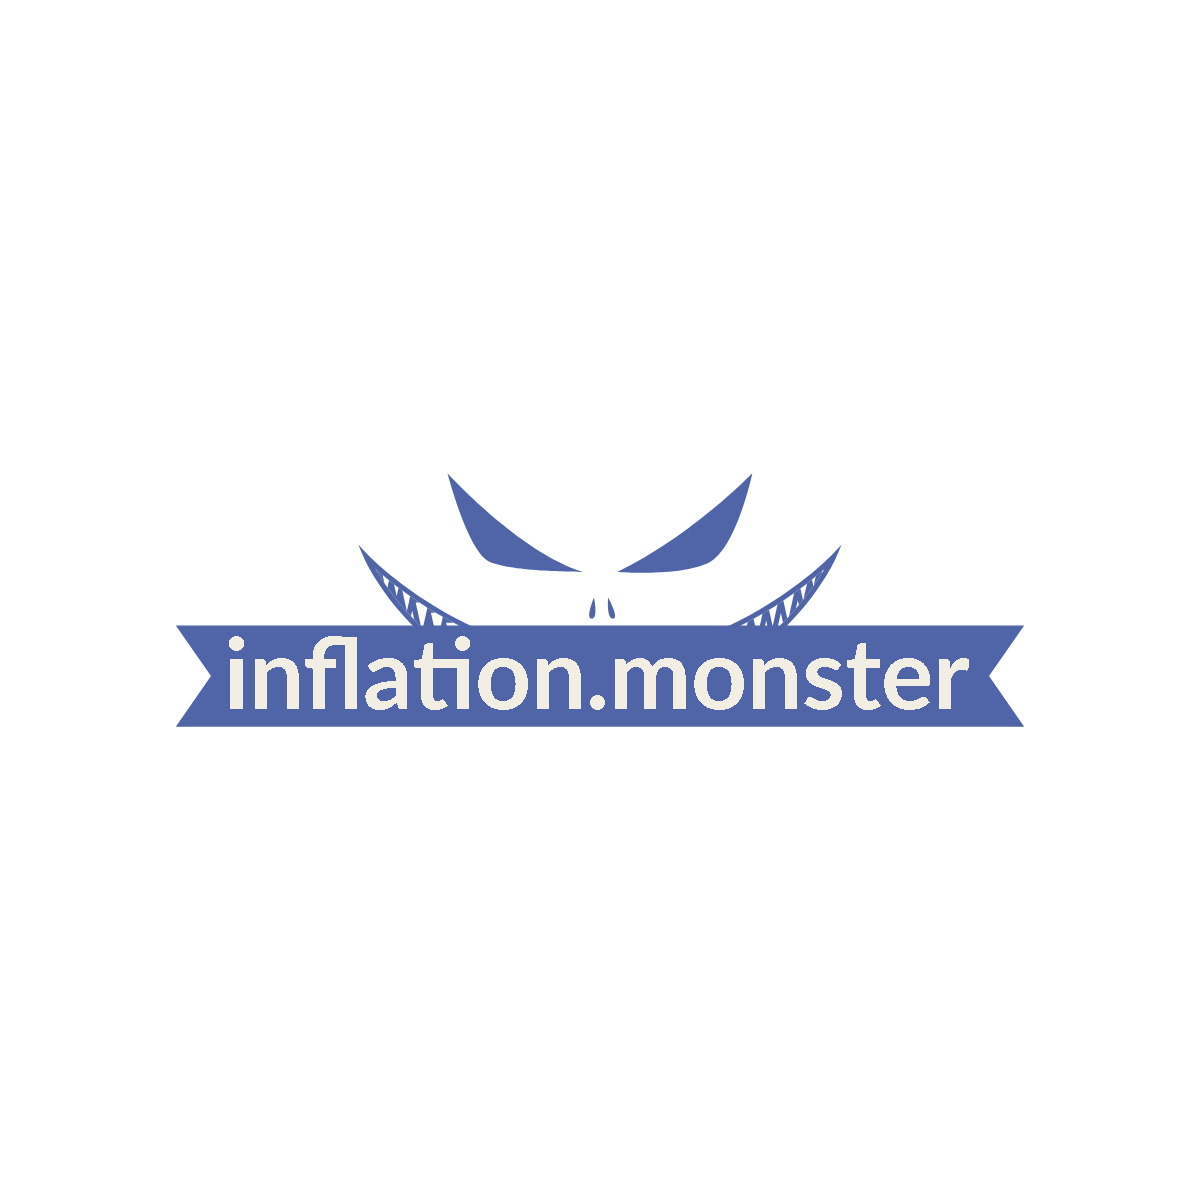 inflationmonster logo